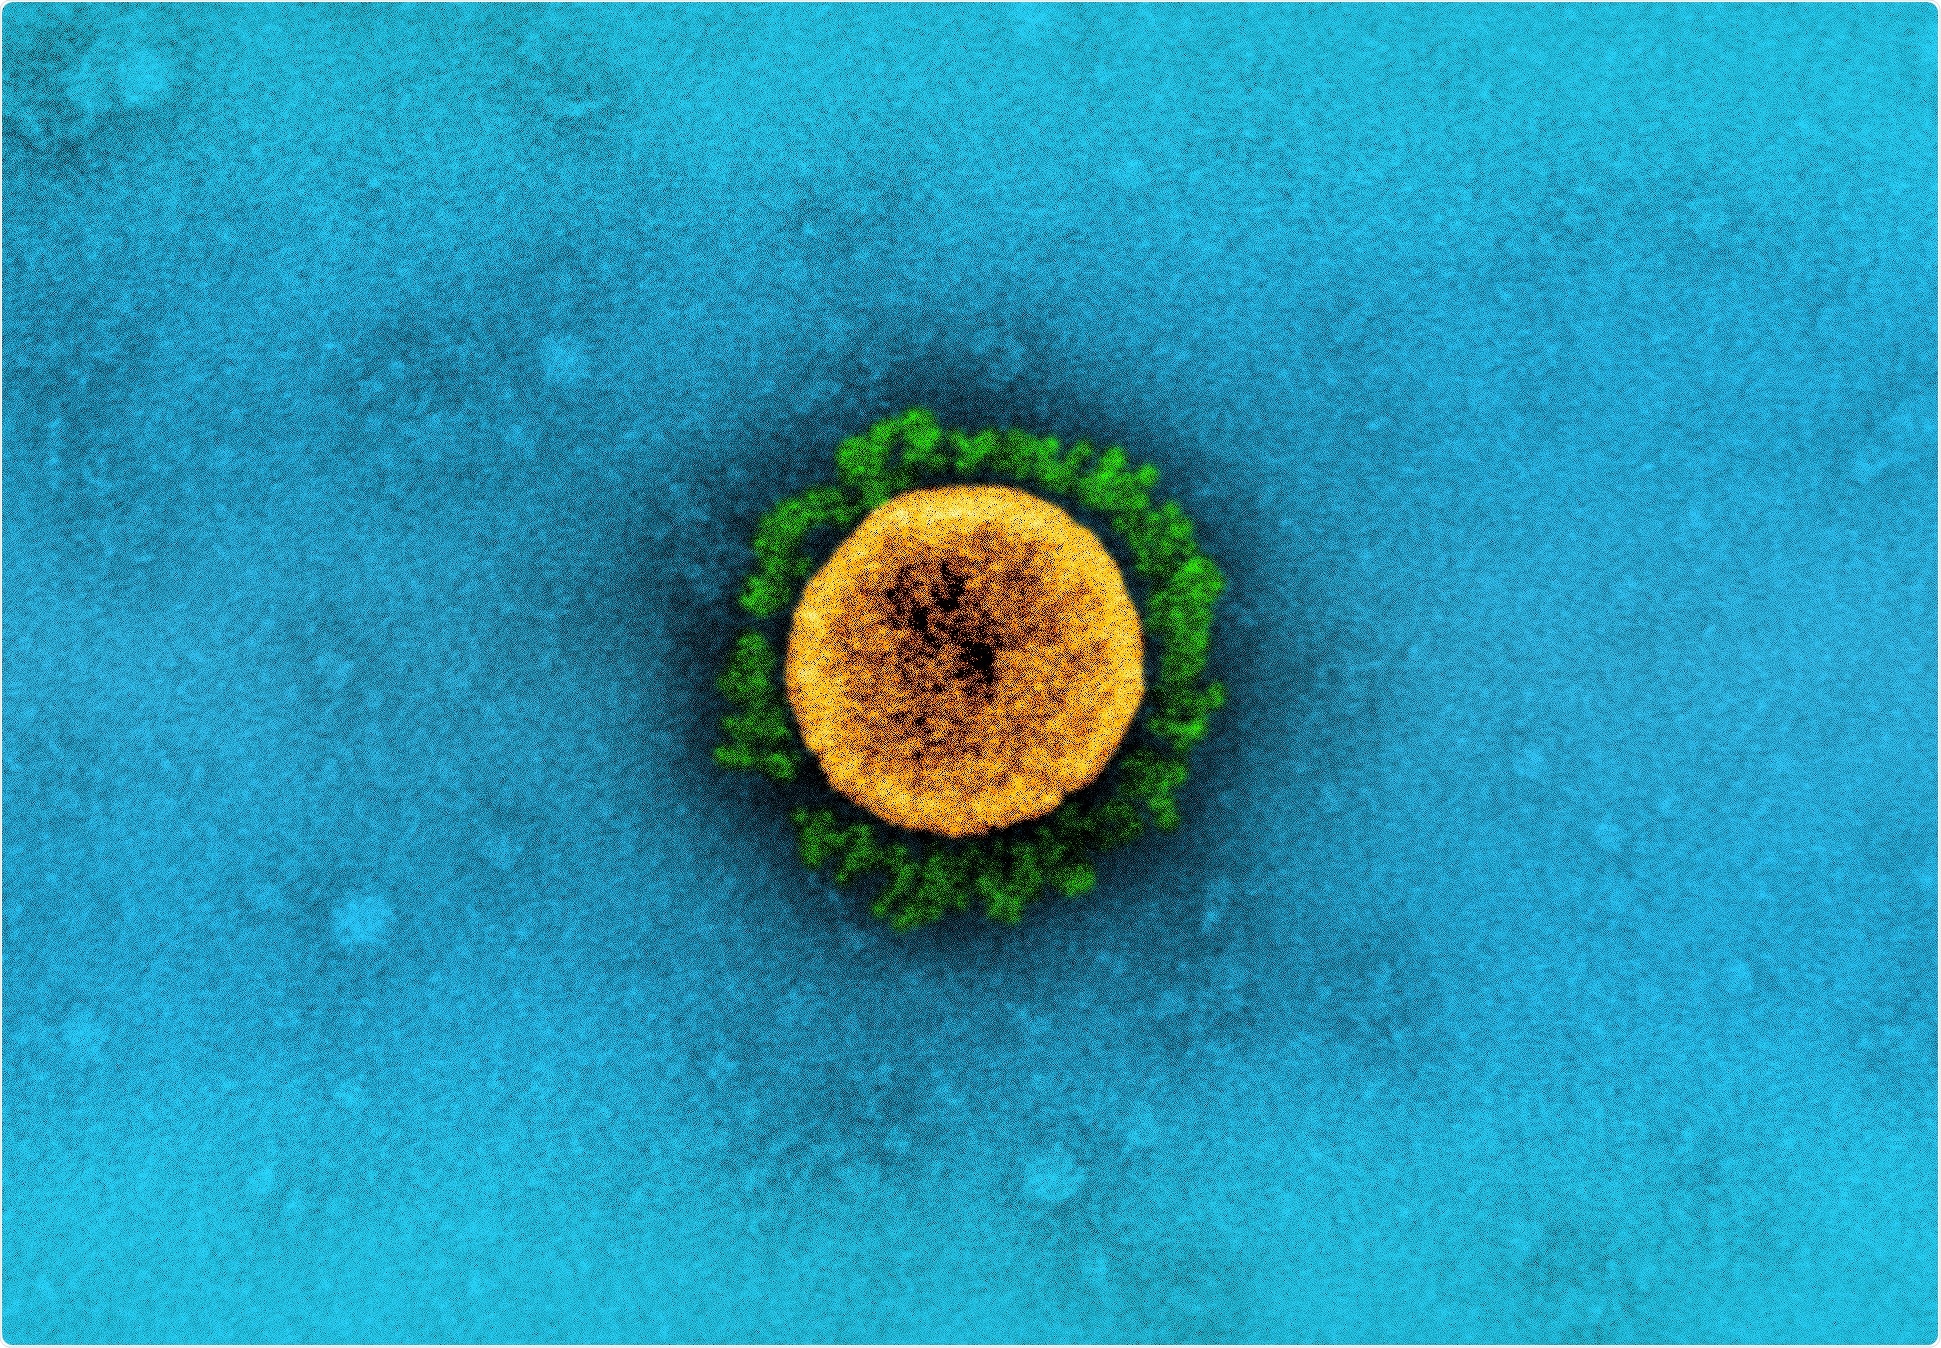 Study: Epidemiological characteristics of the B.1.526 SARS-CoV-2 variant. Image Credit: NIAID